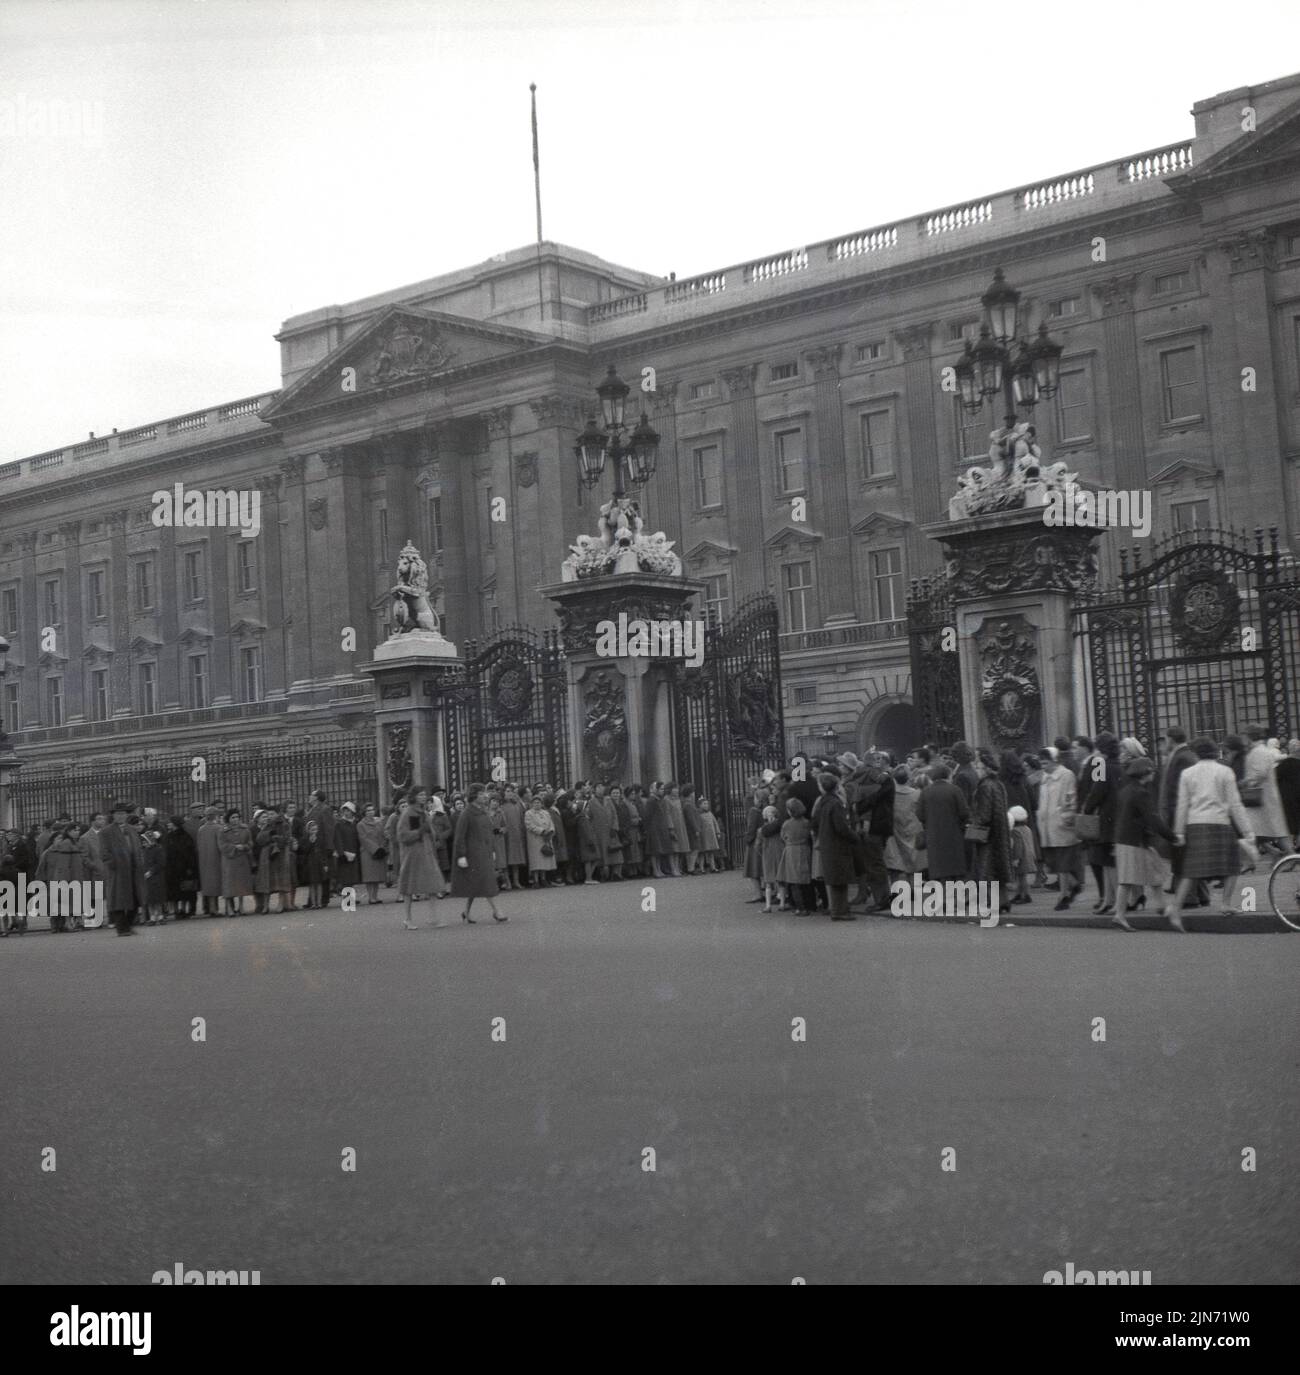 1950s, historical, people gathered outside at the gates to Buckingham Palace, the London residence of the British Royal Family, London, England, UK. Stock Photo